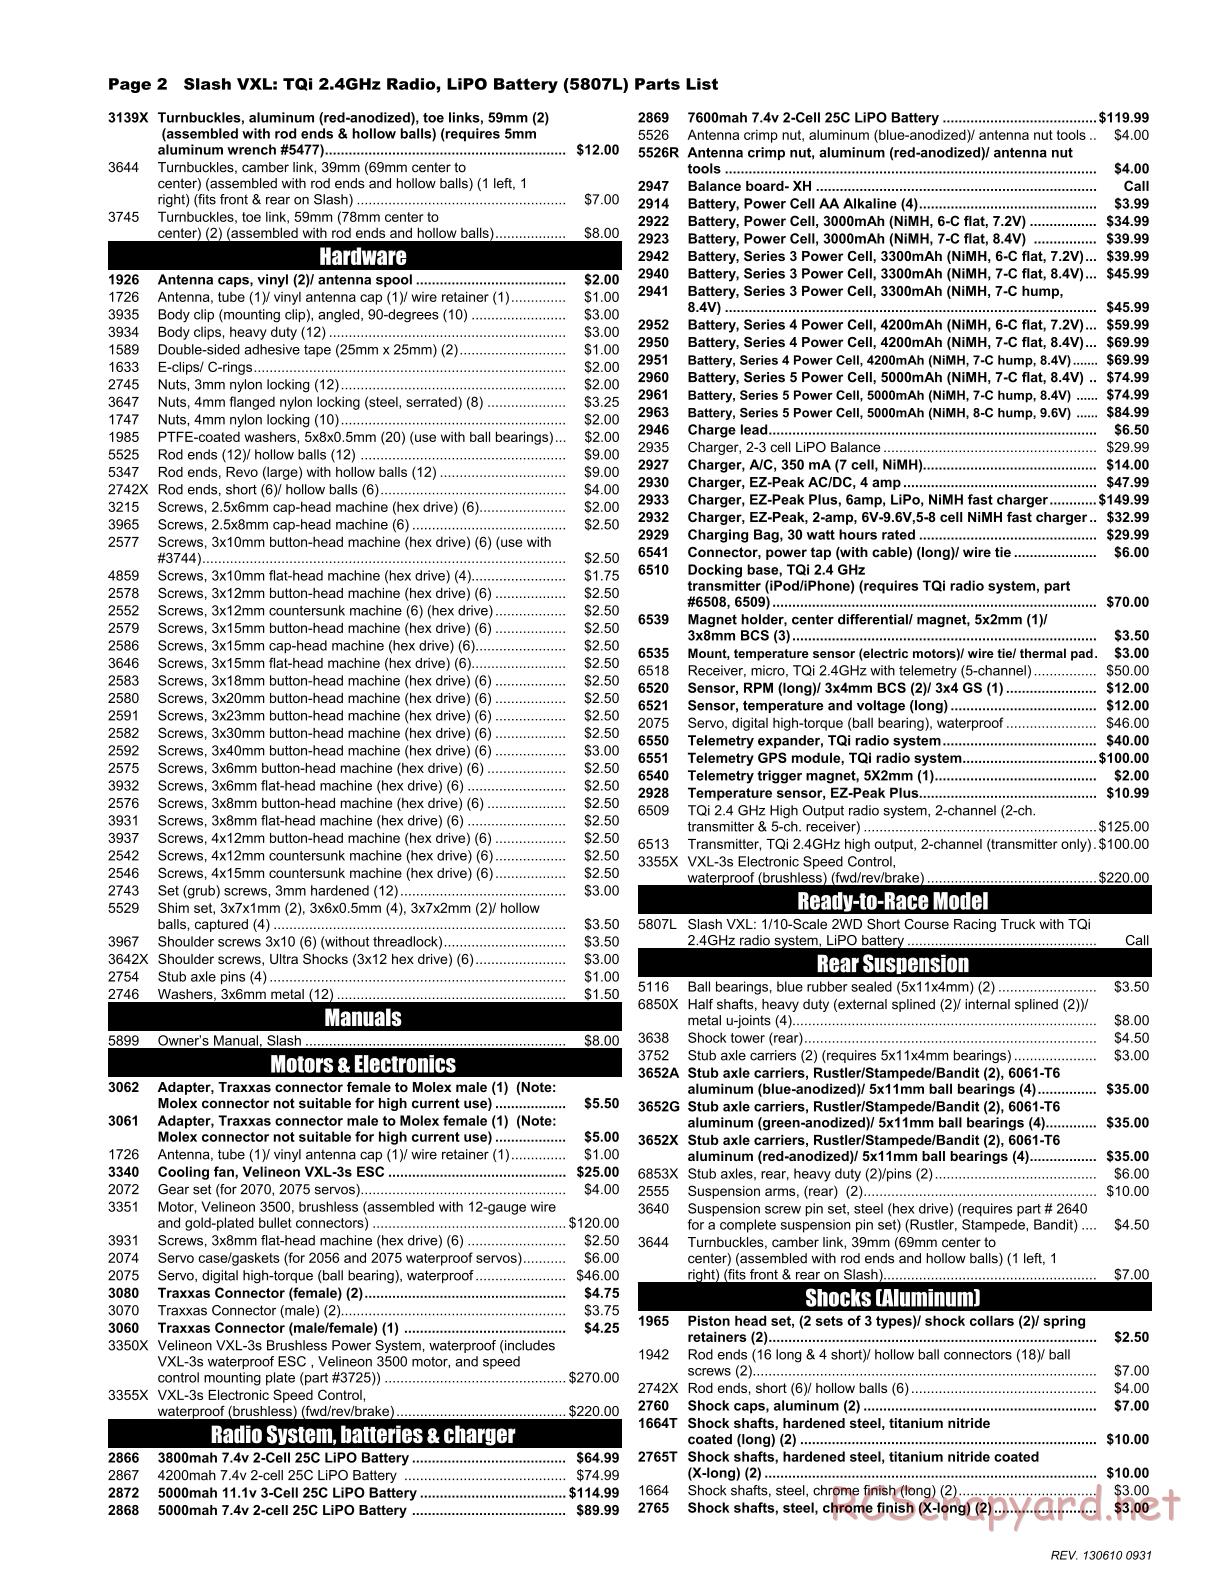 Traxxas - Slash 2WD VXL LiPo (2012) - Parts List - Page 2